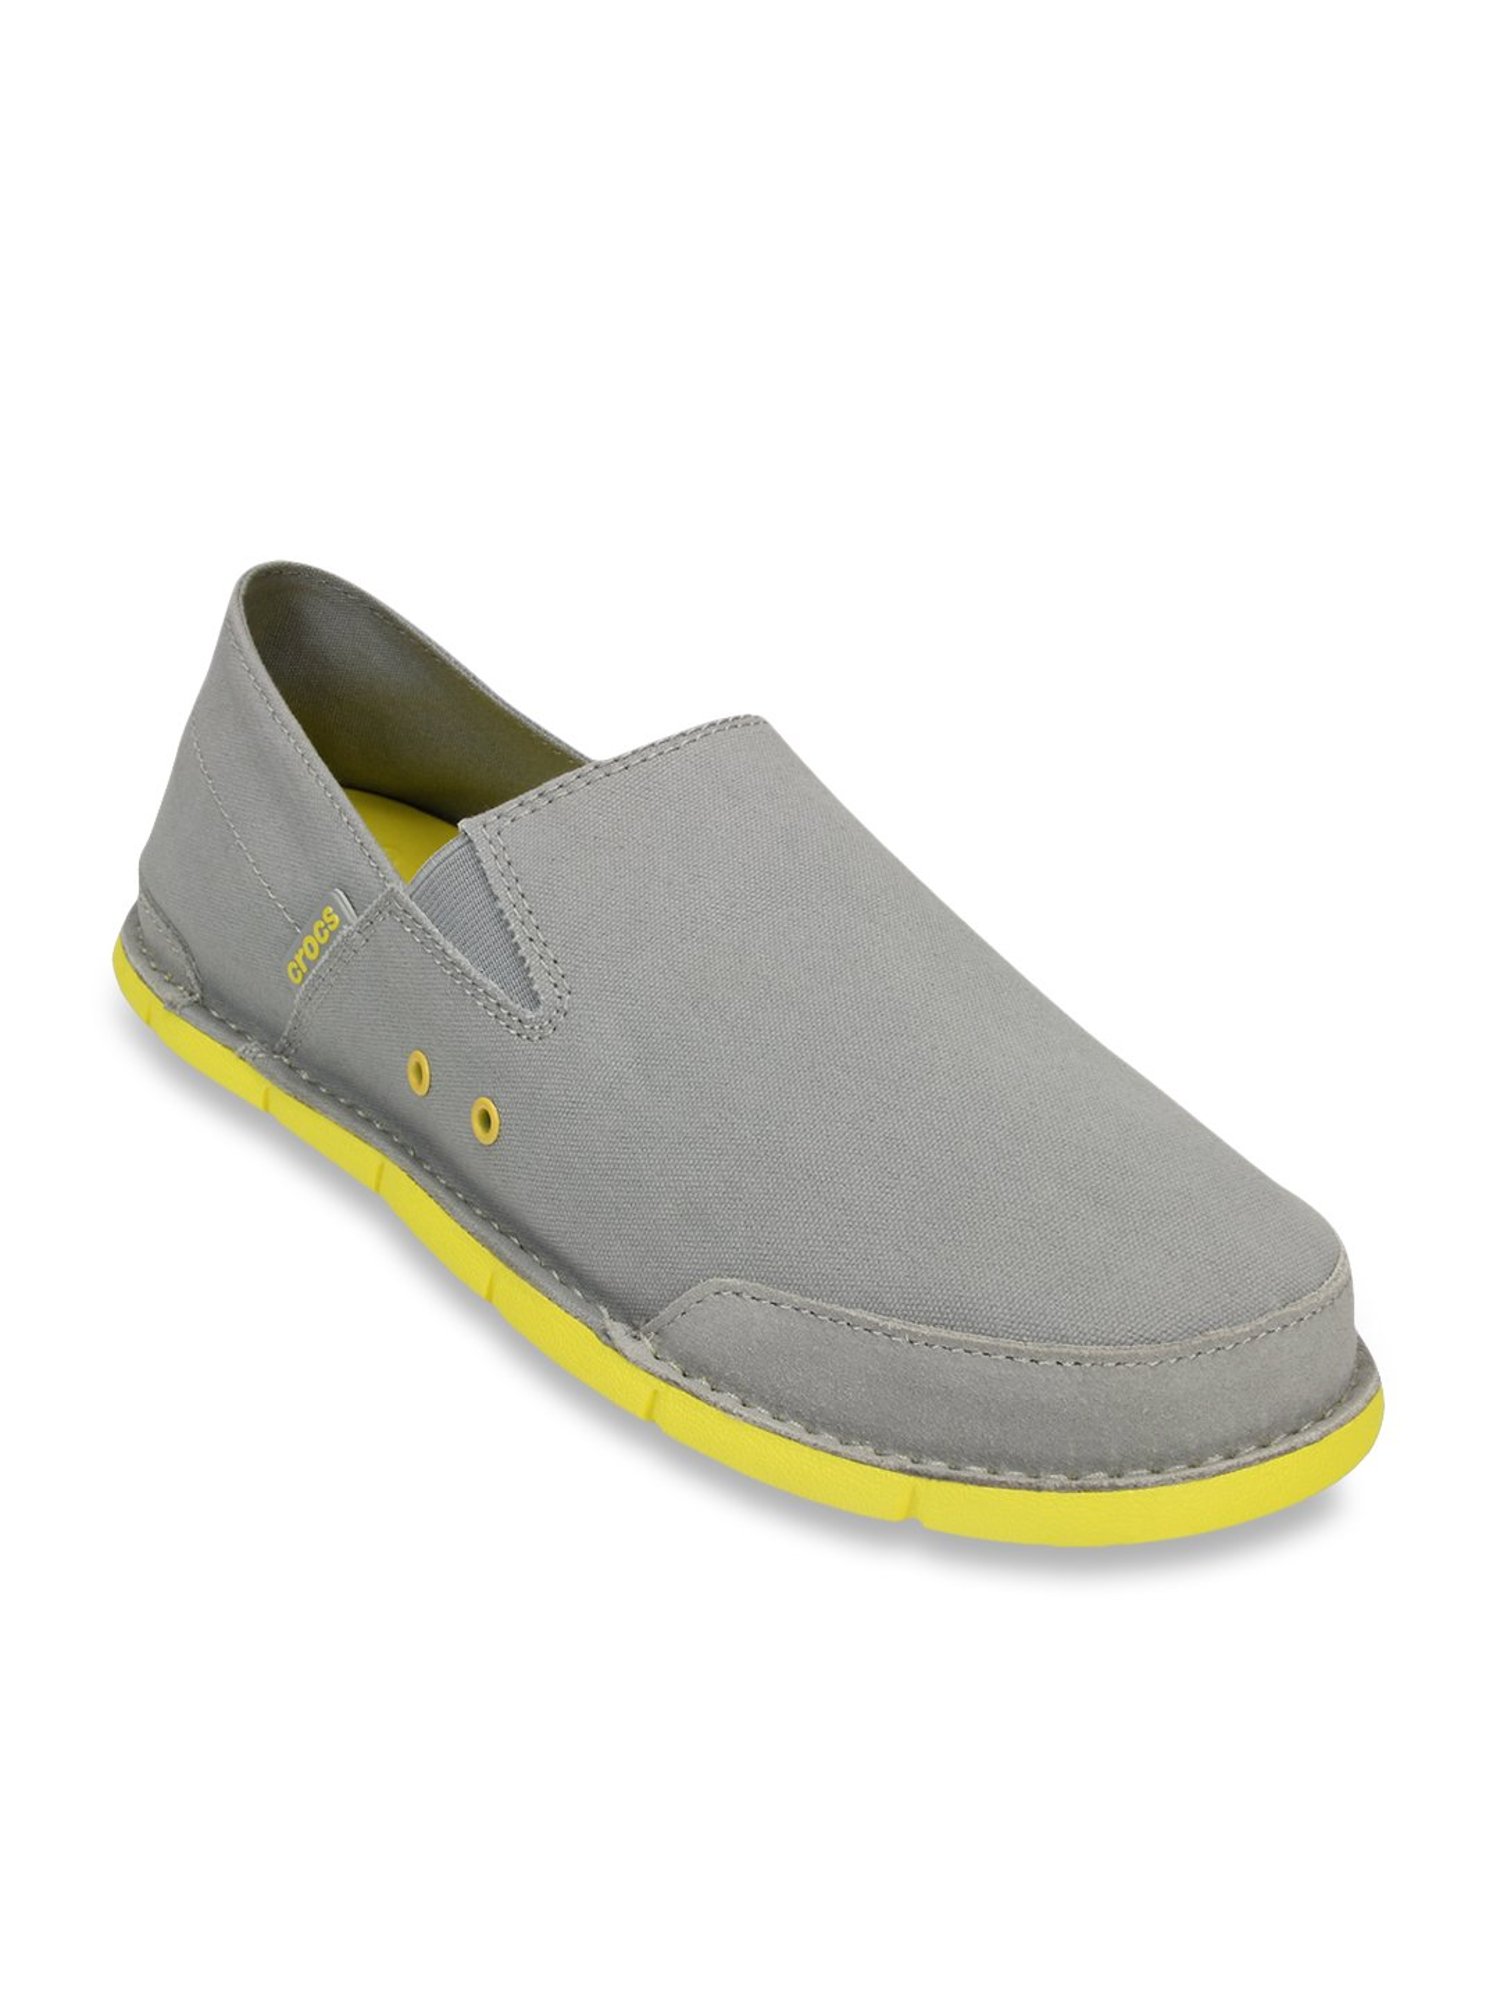 Buy Crocs Cabo Light Grey Slip-Ons for 